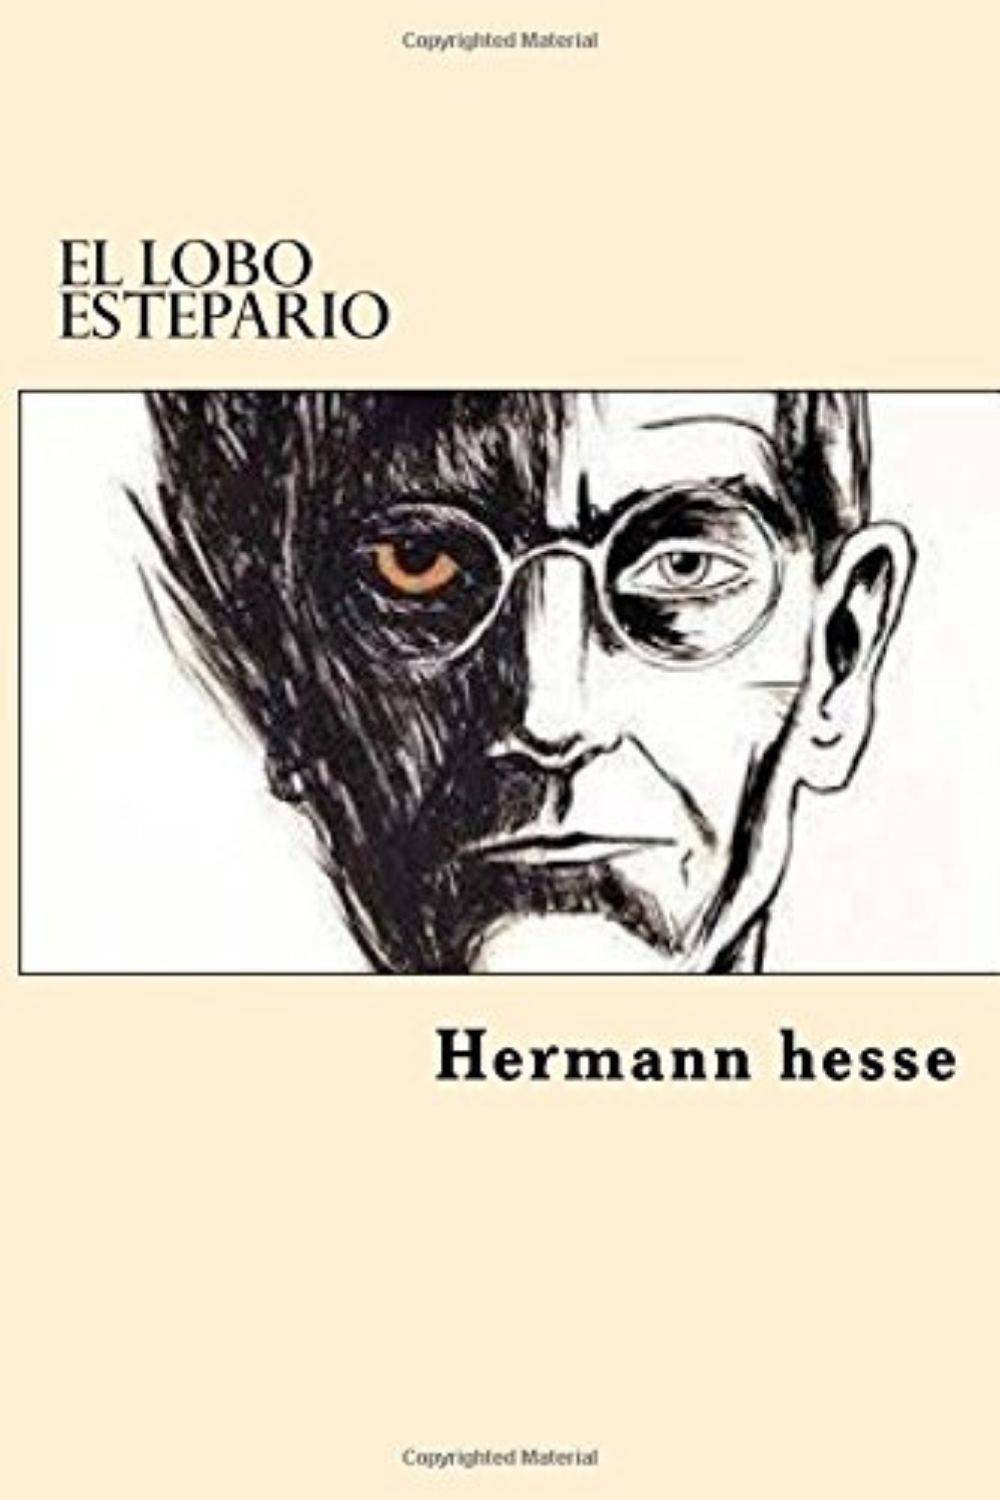 ‘El lobo estepario’ de Herman Hesse